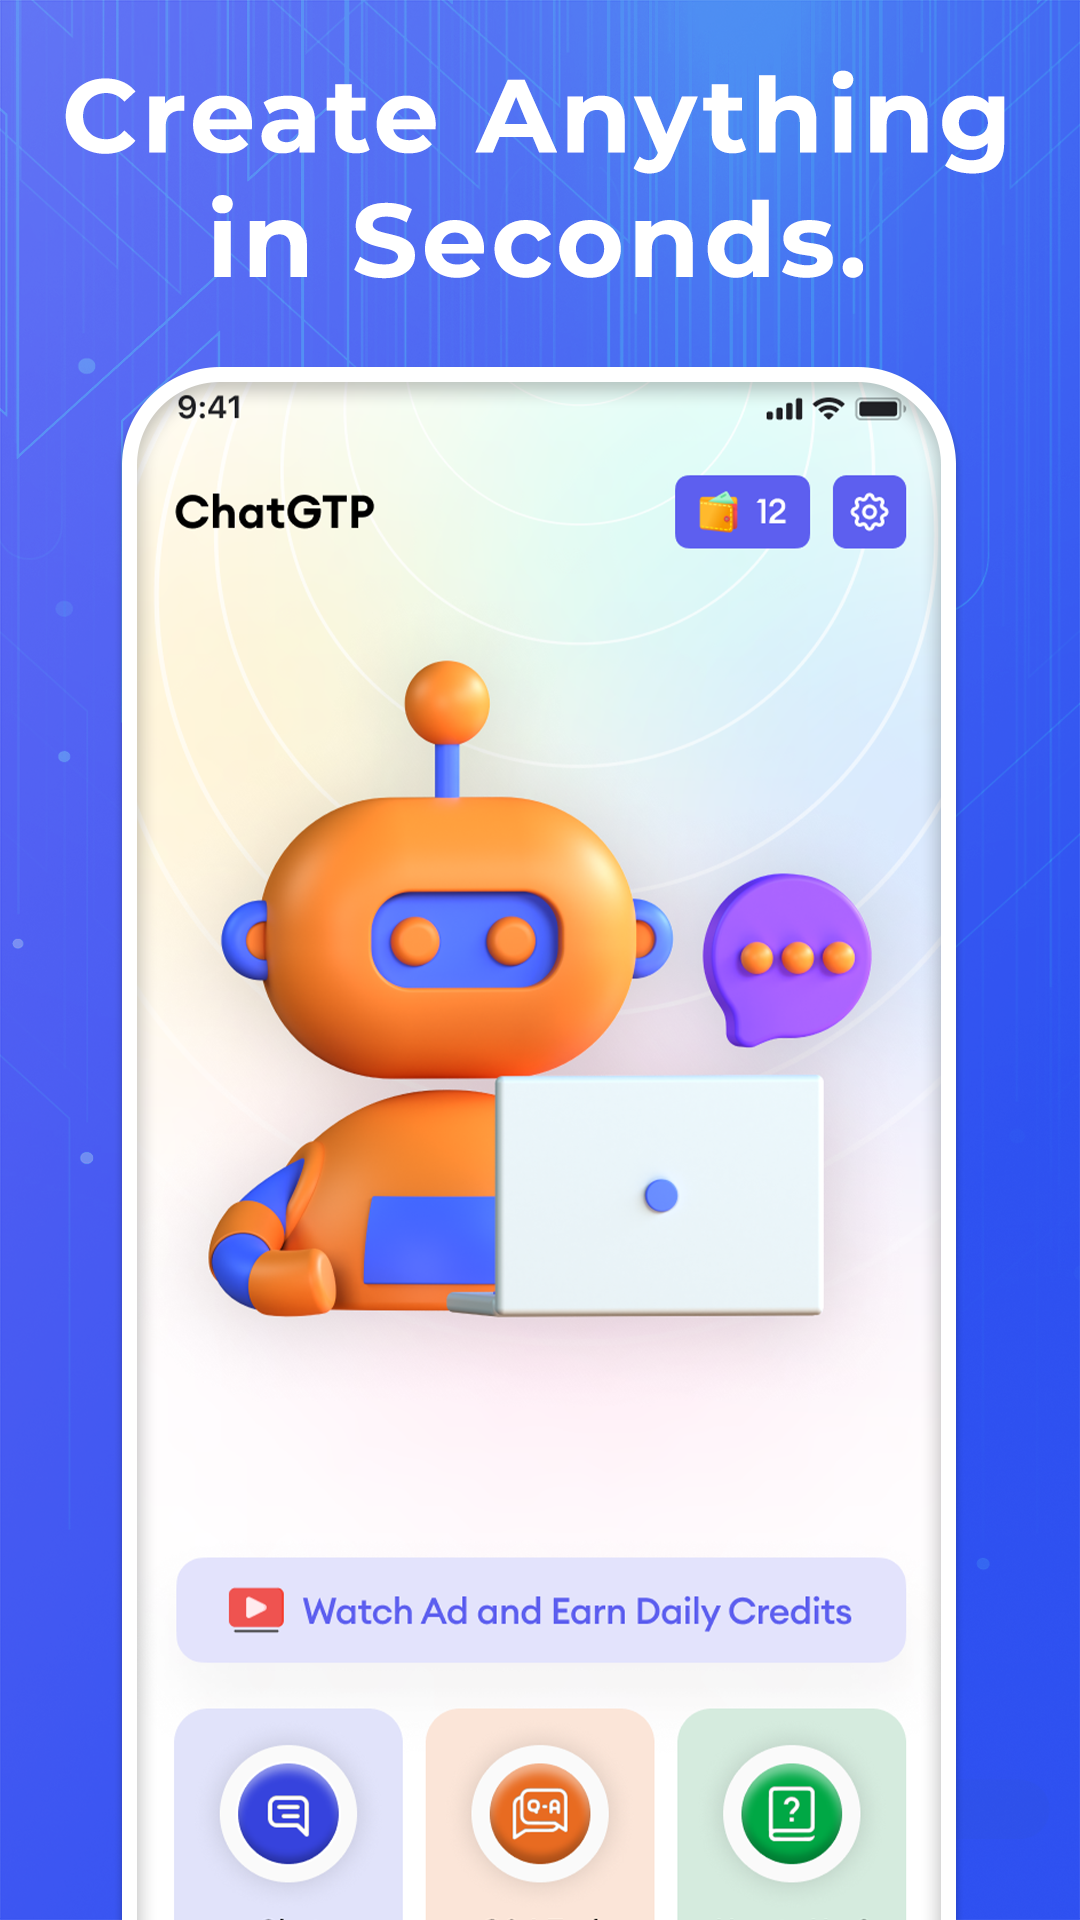 AI Smart Chat Bot & Assistant